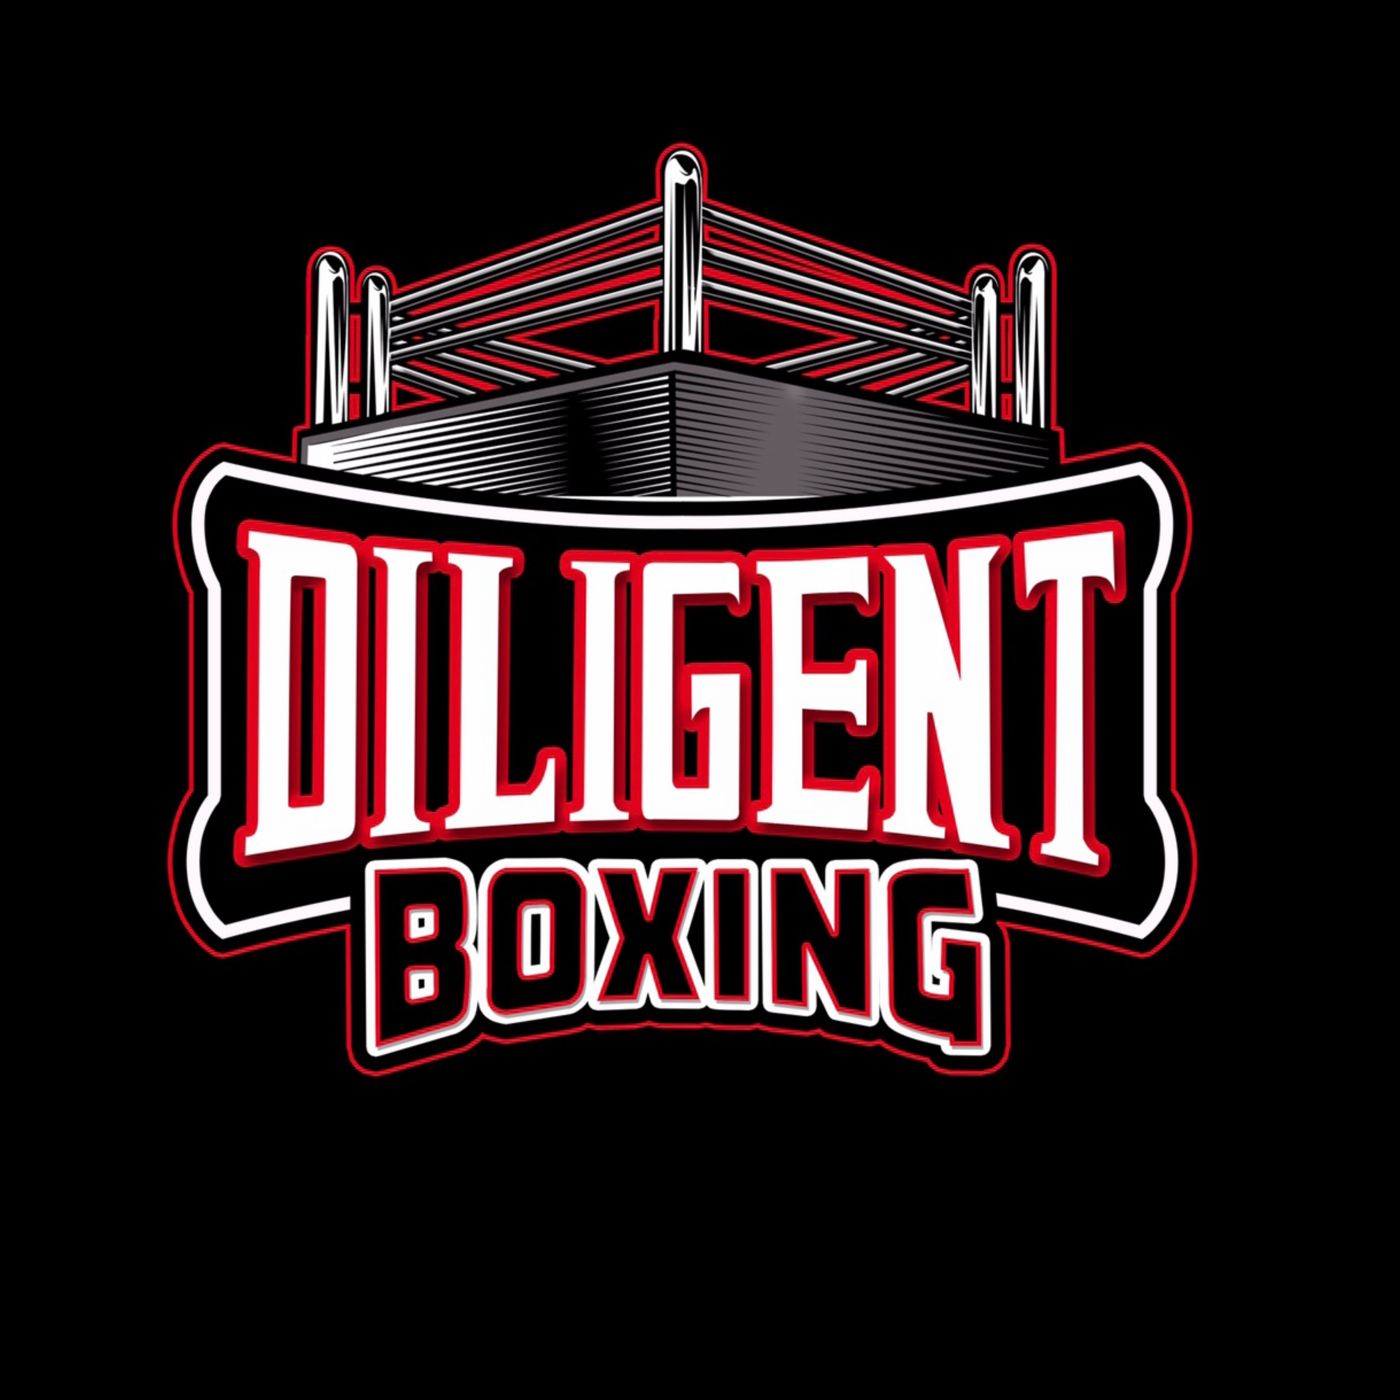 Diligent Boxing